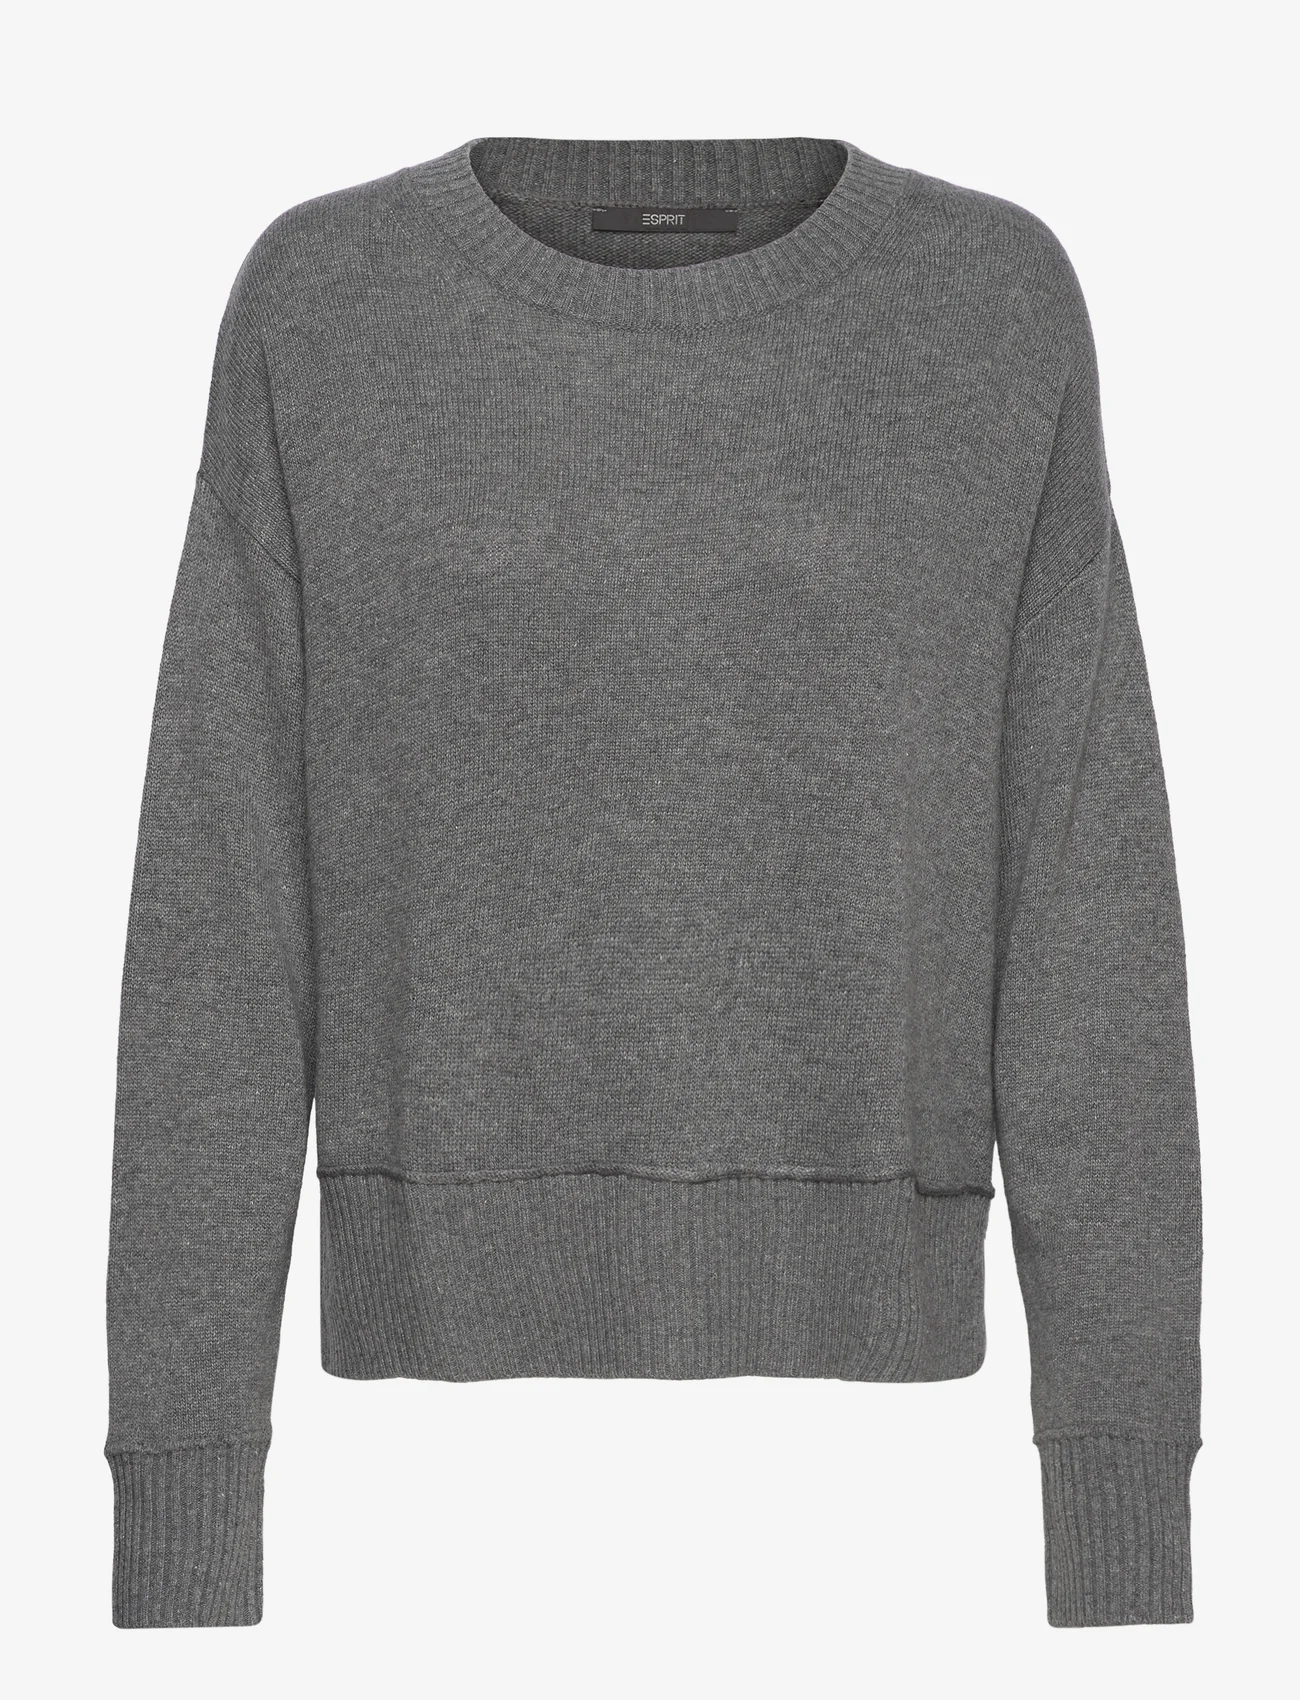 Esprit Collection - Knitted wool blend jumper - trøjer - medium grey 5 - 0